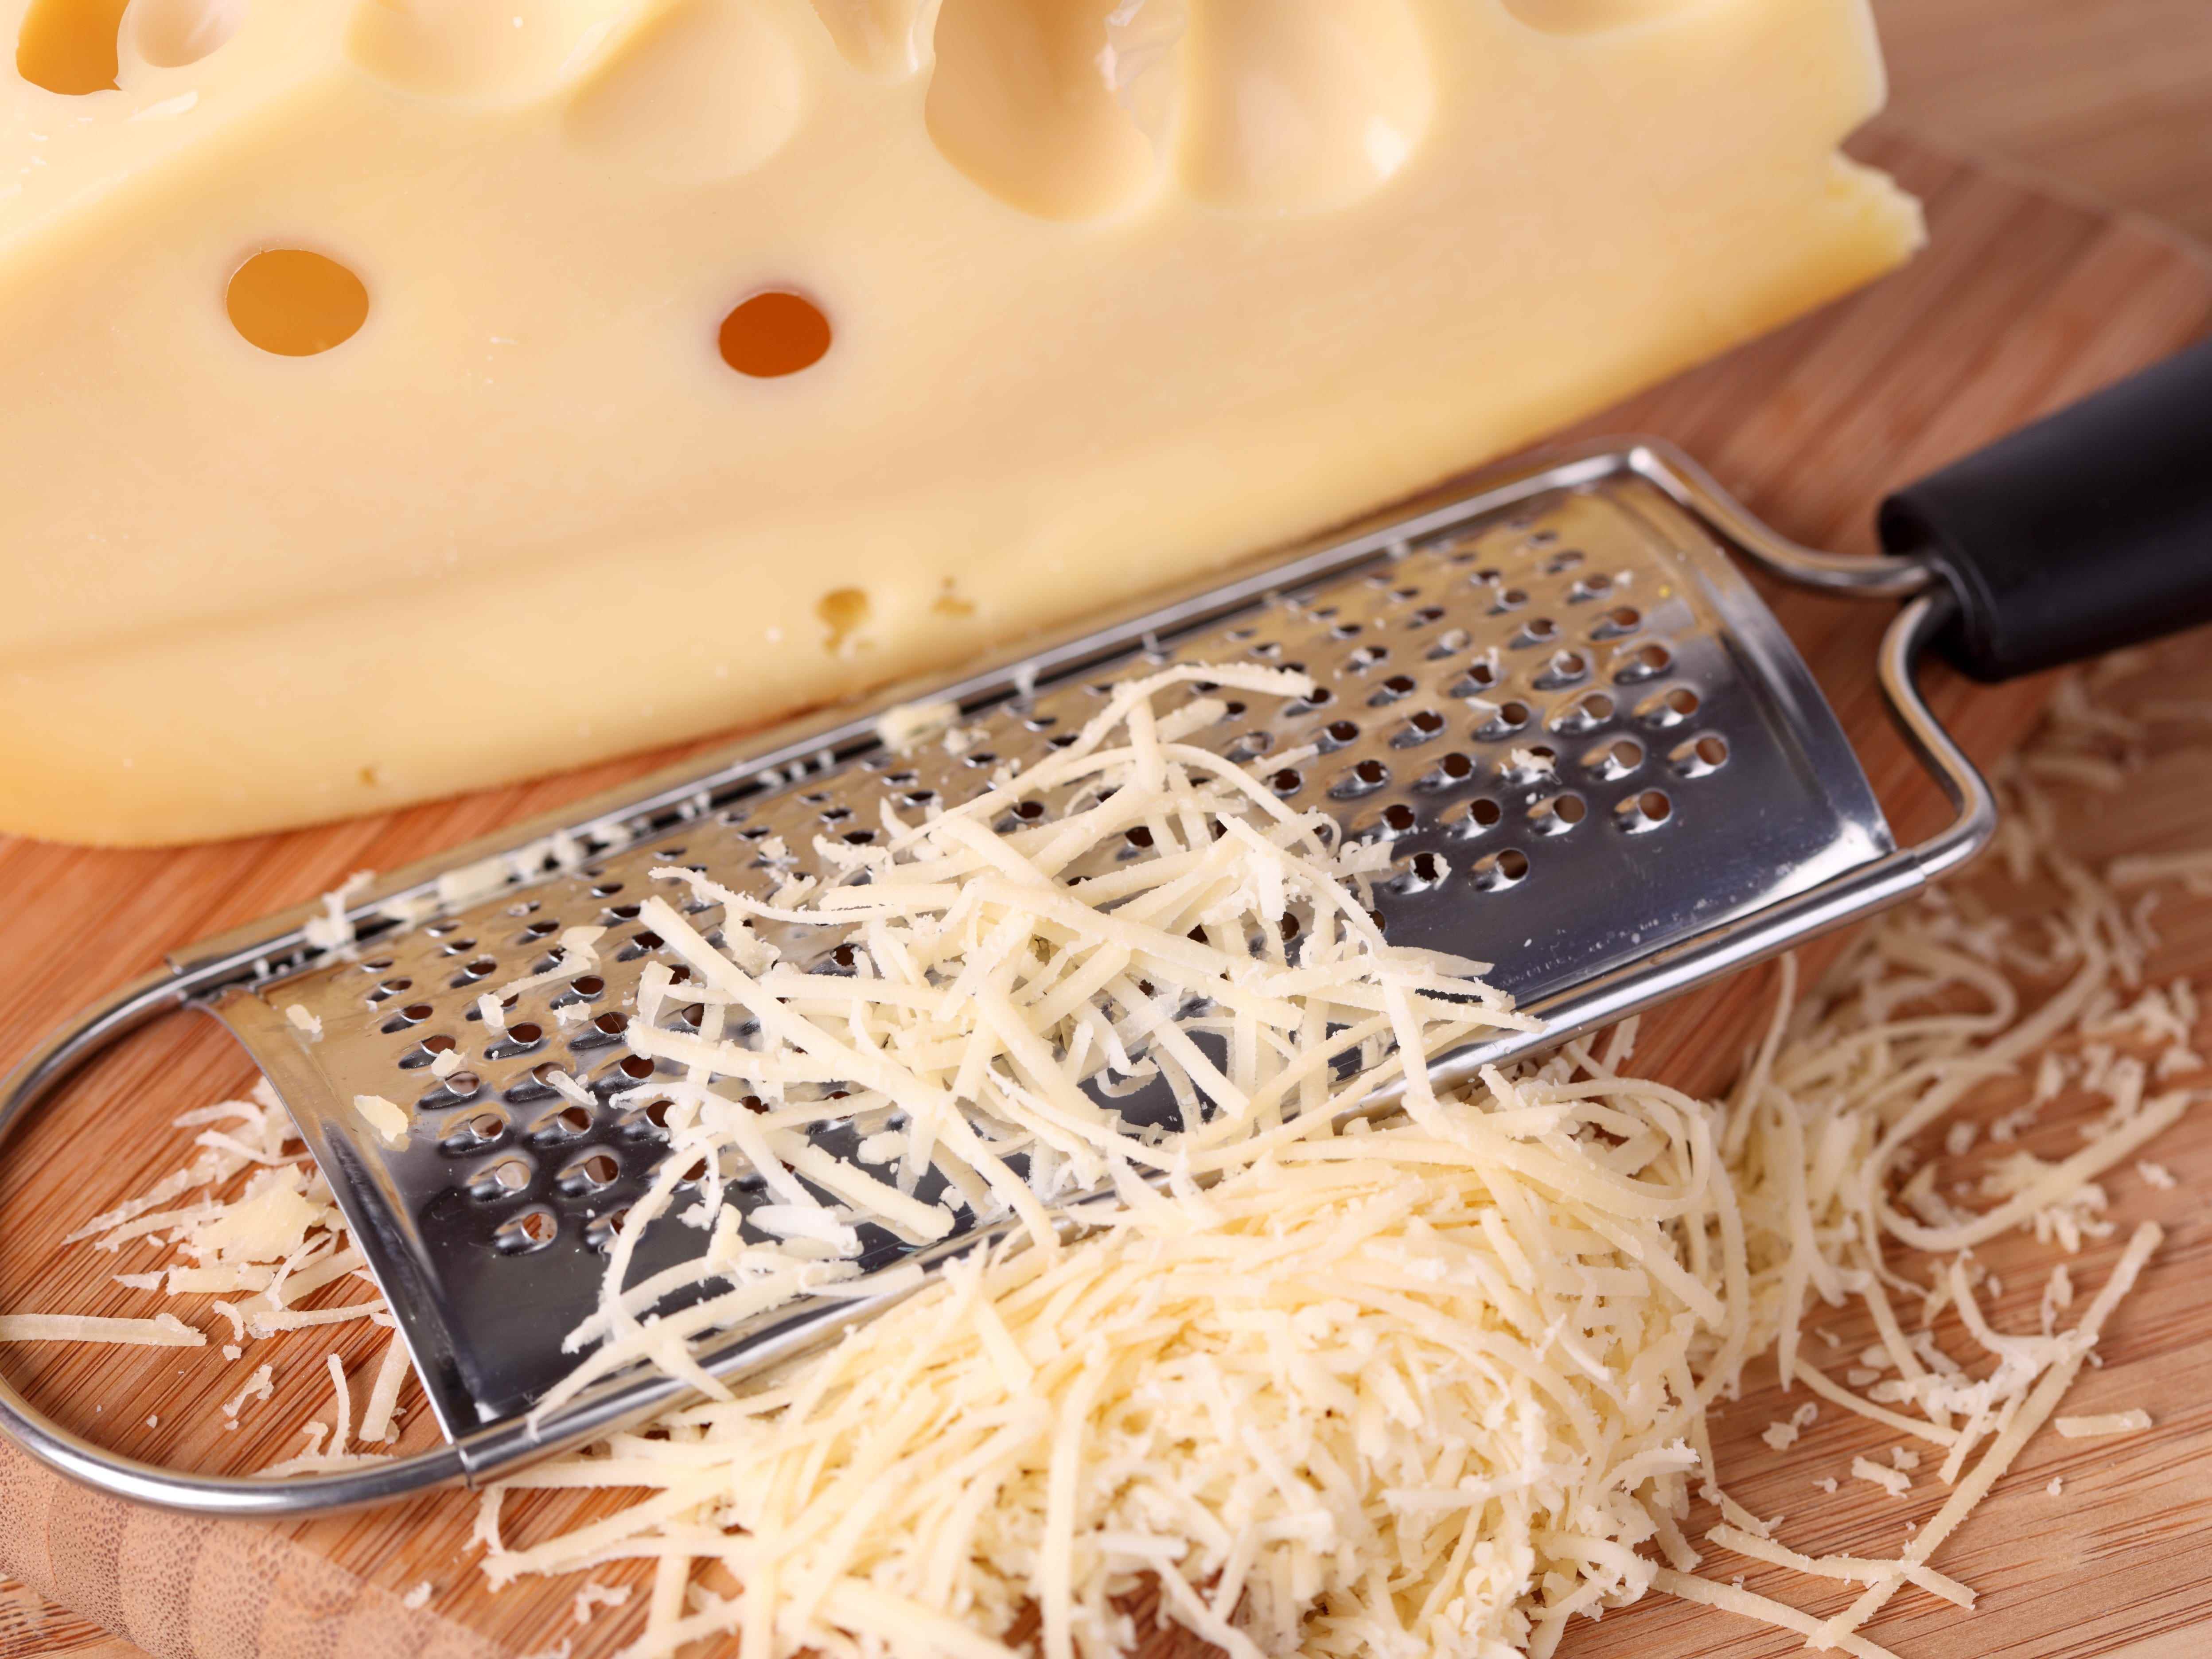 Käseblock neben Stapel geriebenem Käse und Metallreibe